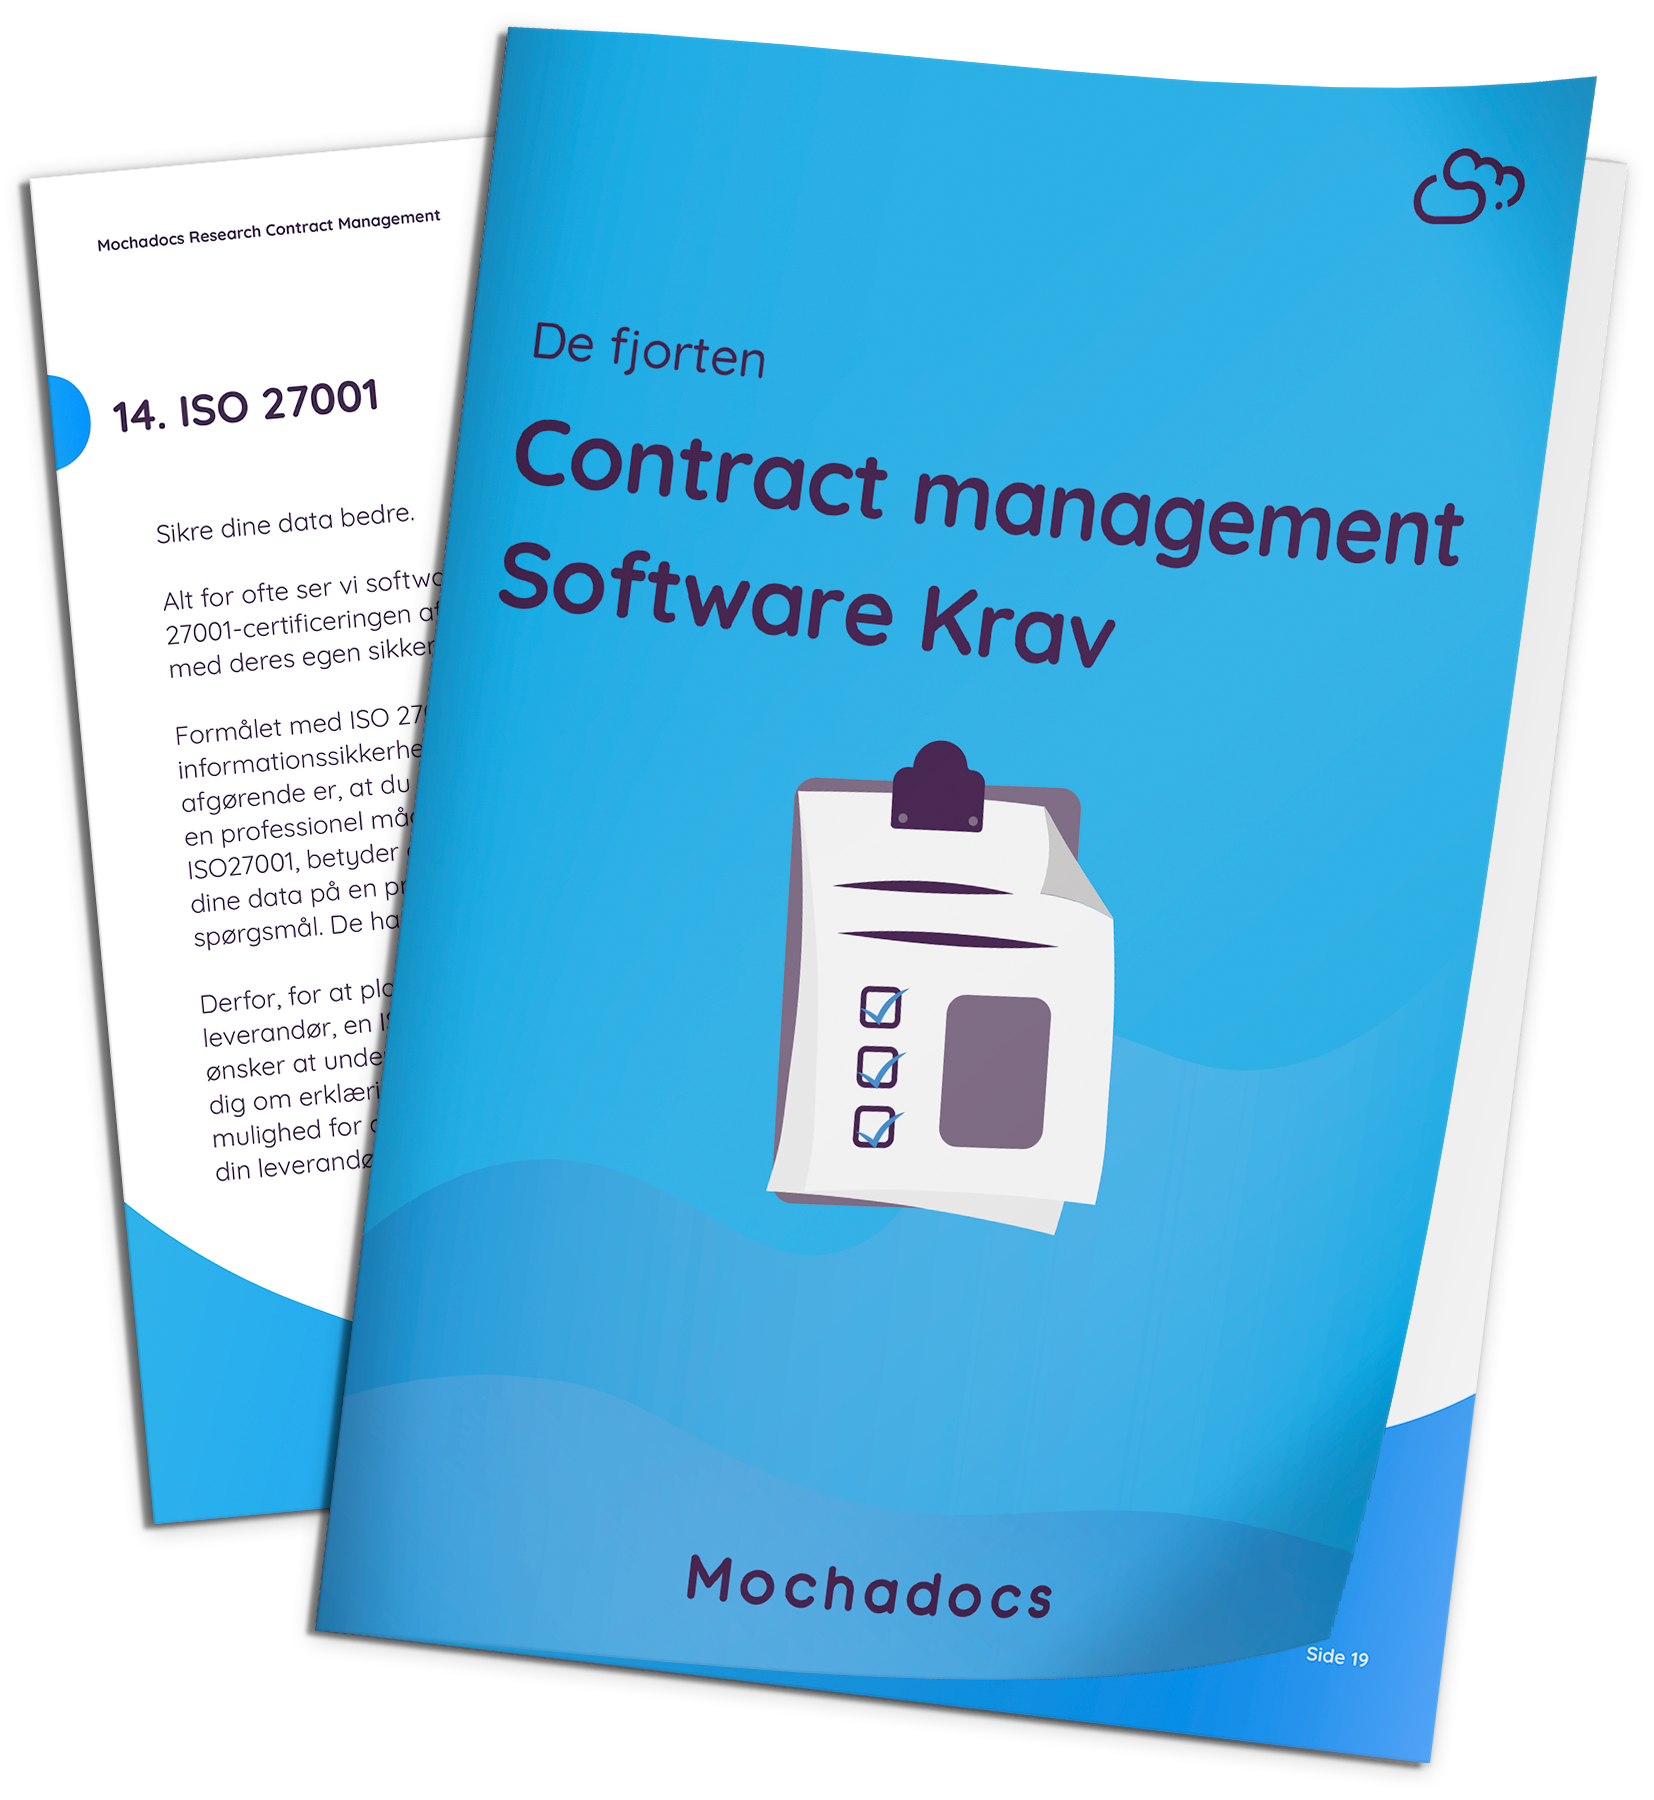 Mochadocs - Contract Management - eBook - De fjorten Contract Managagement Software Krav